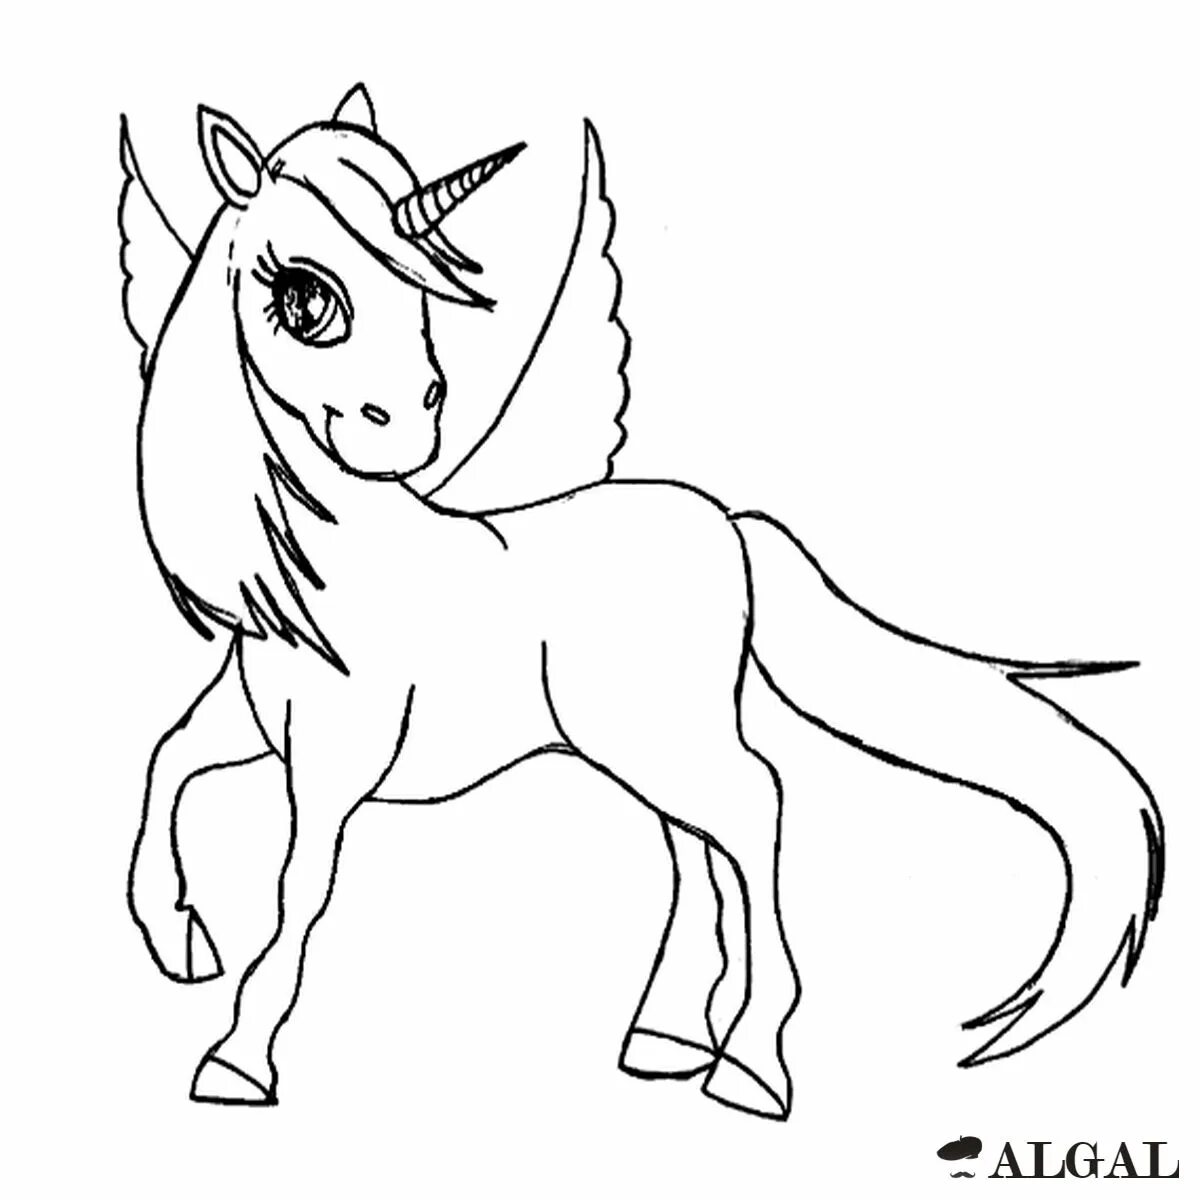 How to draw a unicorn #5